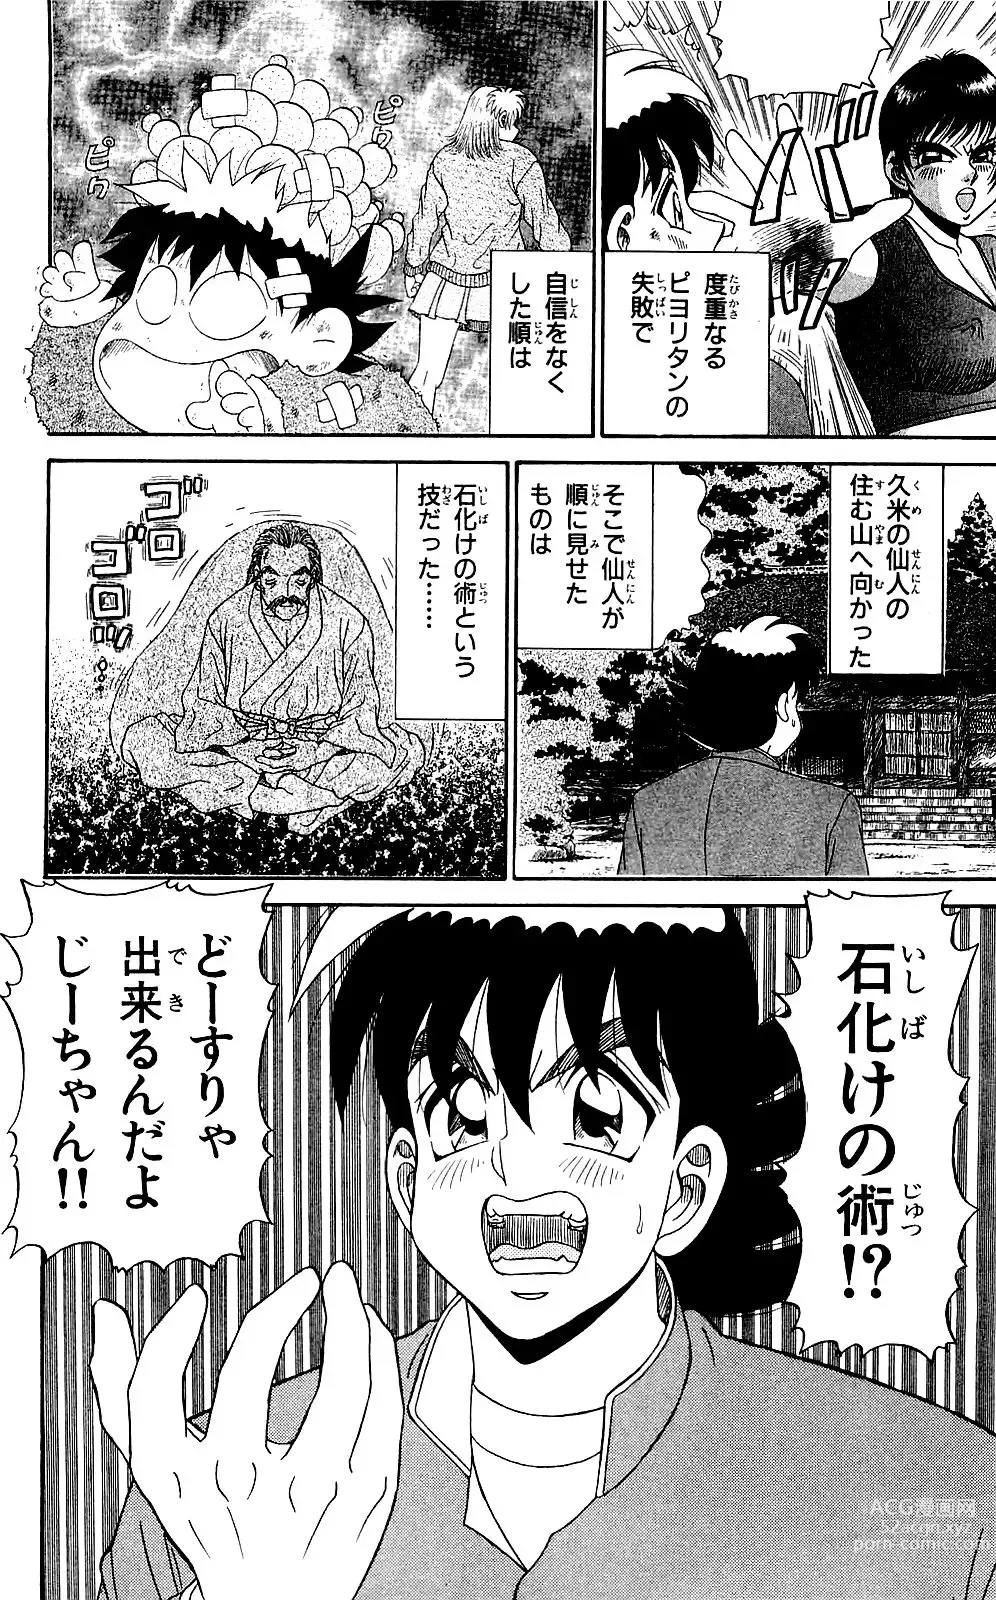 Page 6 of manga Orette Piyoritan 07